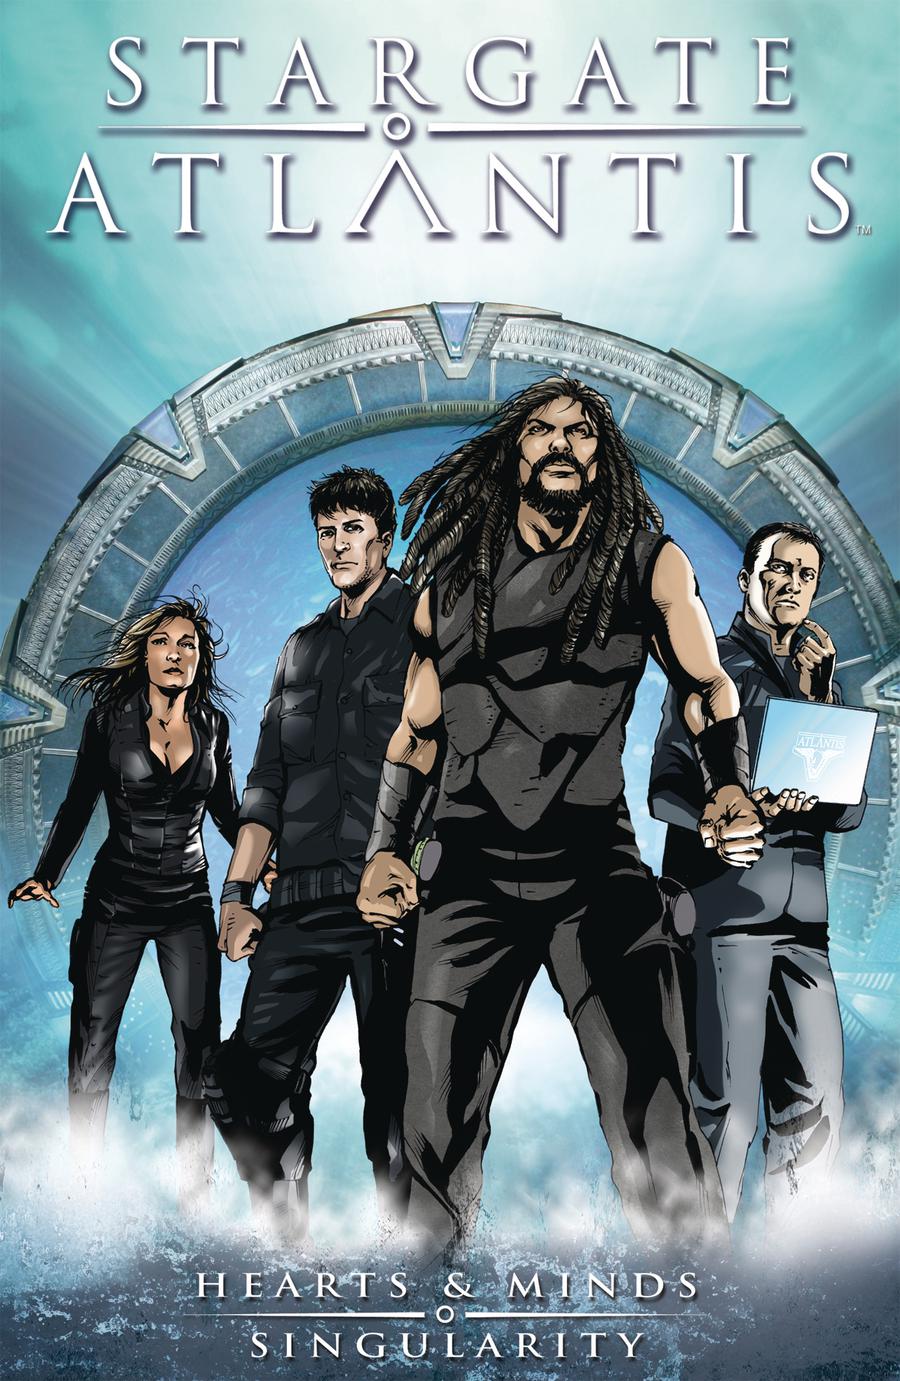 Stargate Atlantis Vol 2 TP